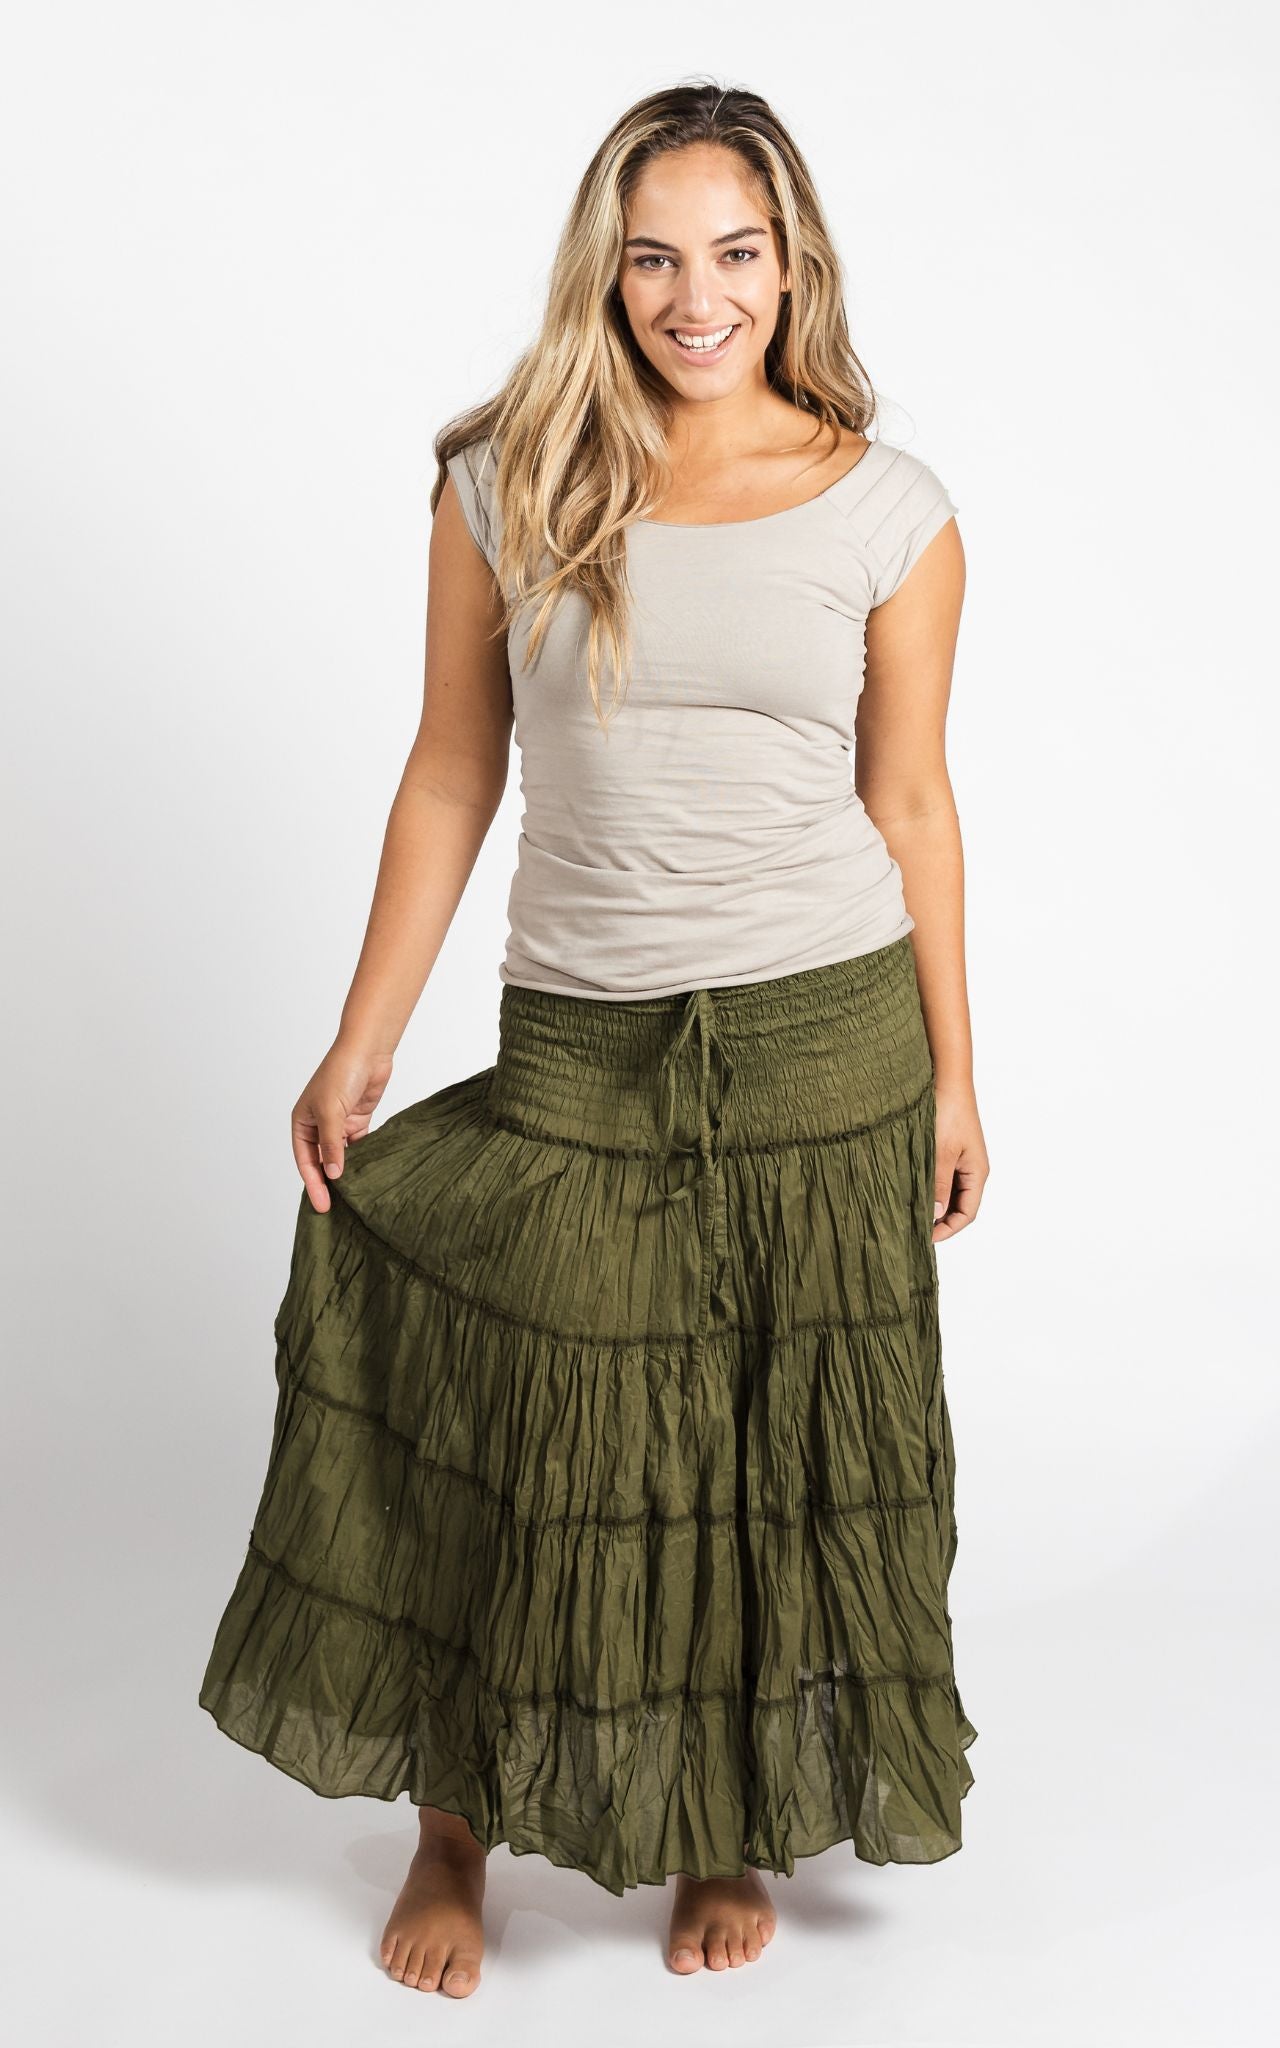 Surya Australia Ethical Cotton 'Franit' Skirt made in Nepal - Green